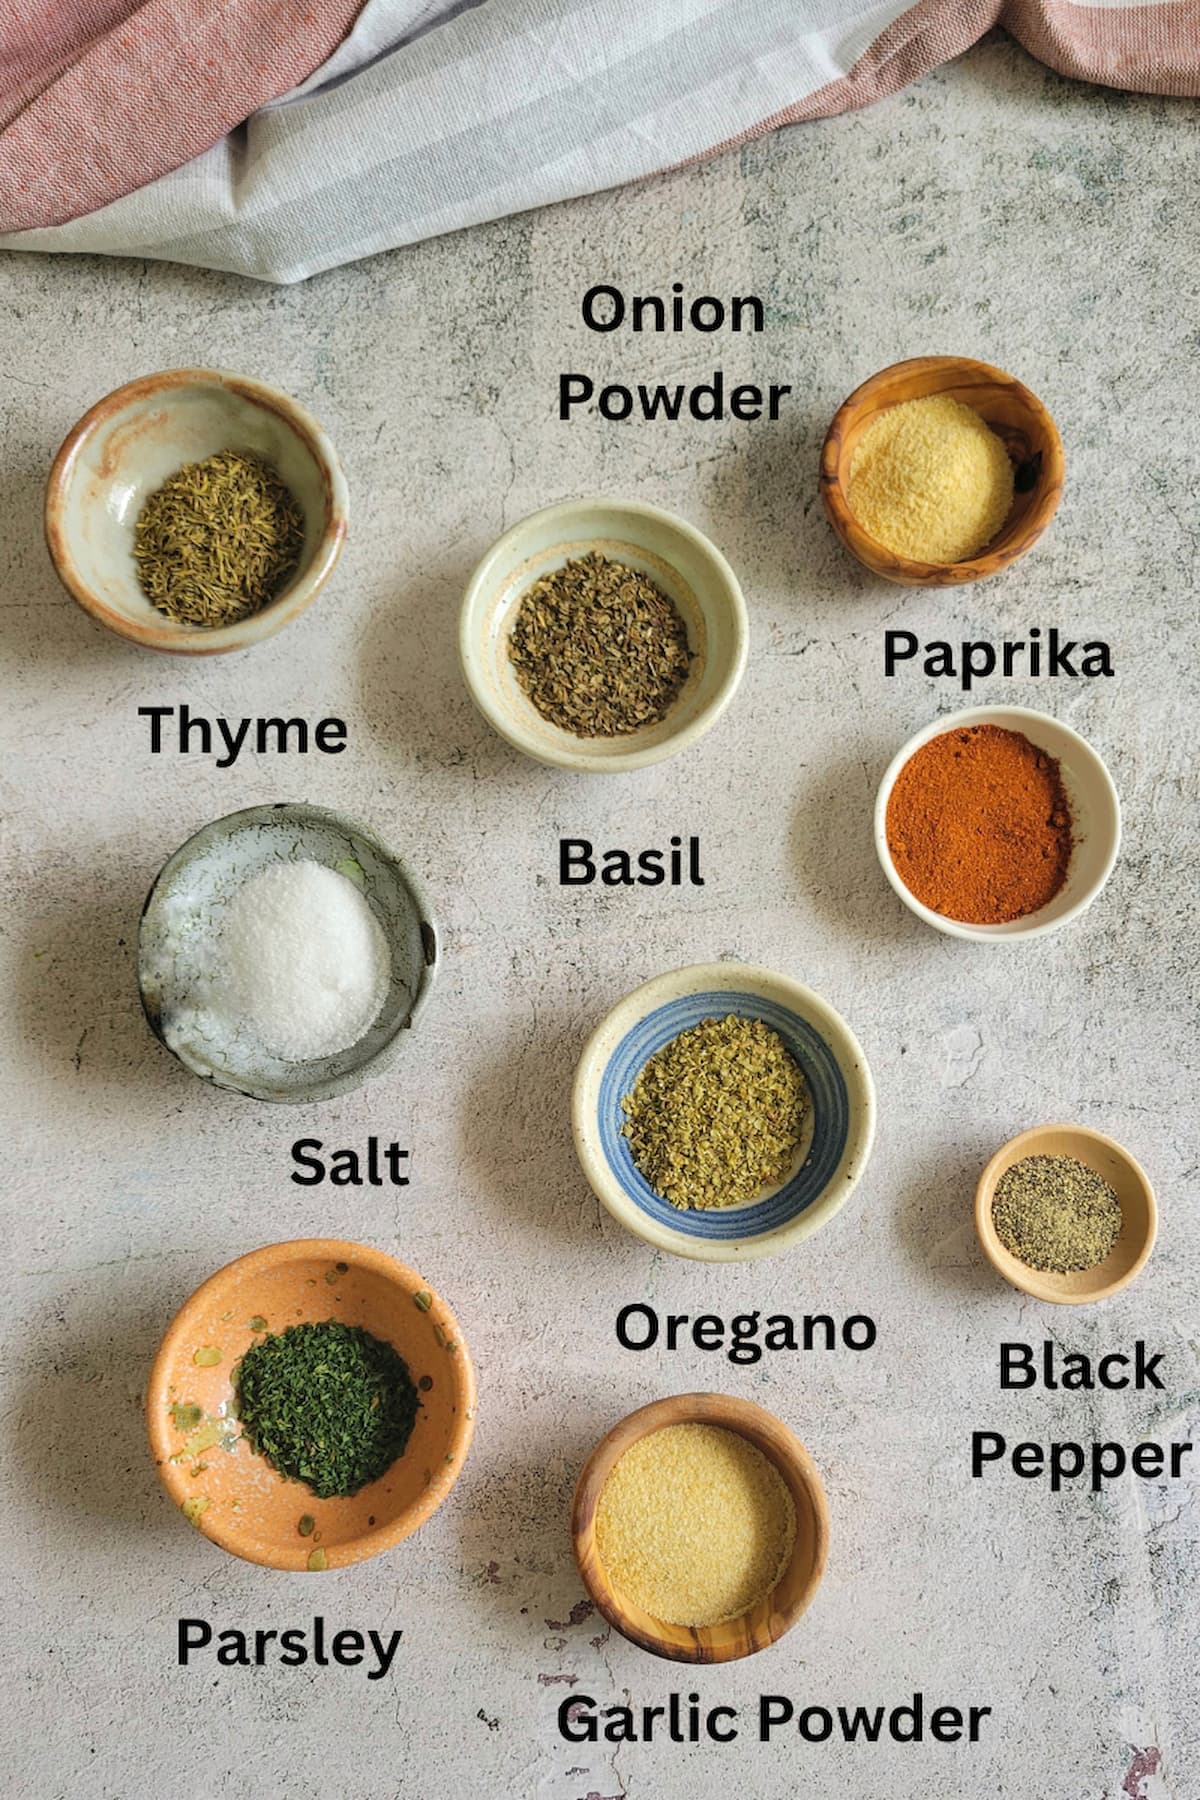 ingredients for seasoning for chicken recipe - thyme, basil, parsley, oregano, garlic powder, onion powder, paprika, black pepper, salt